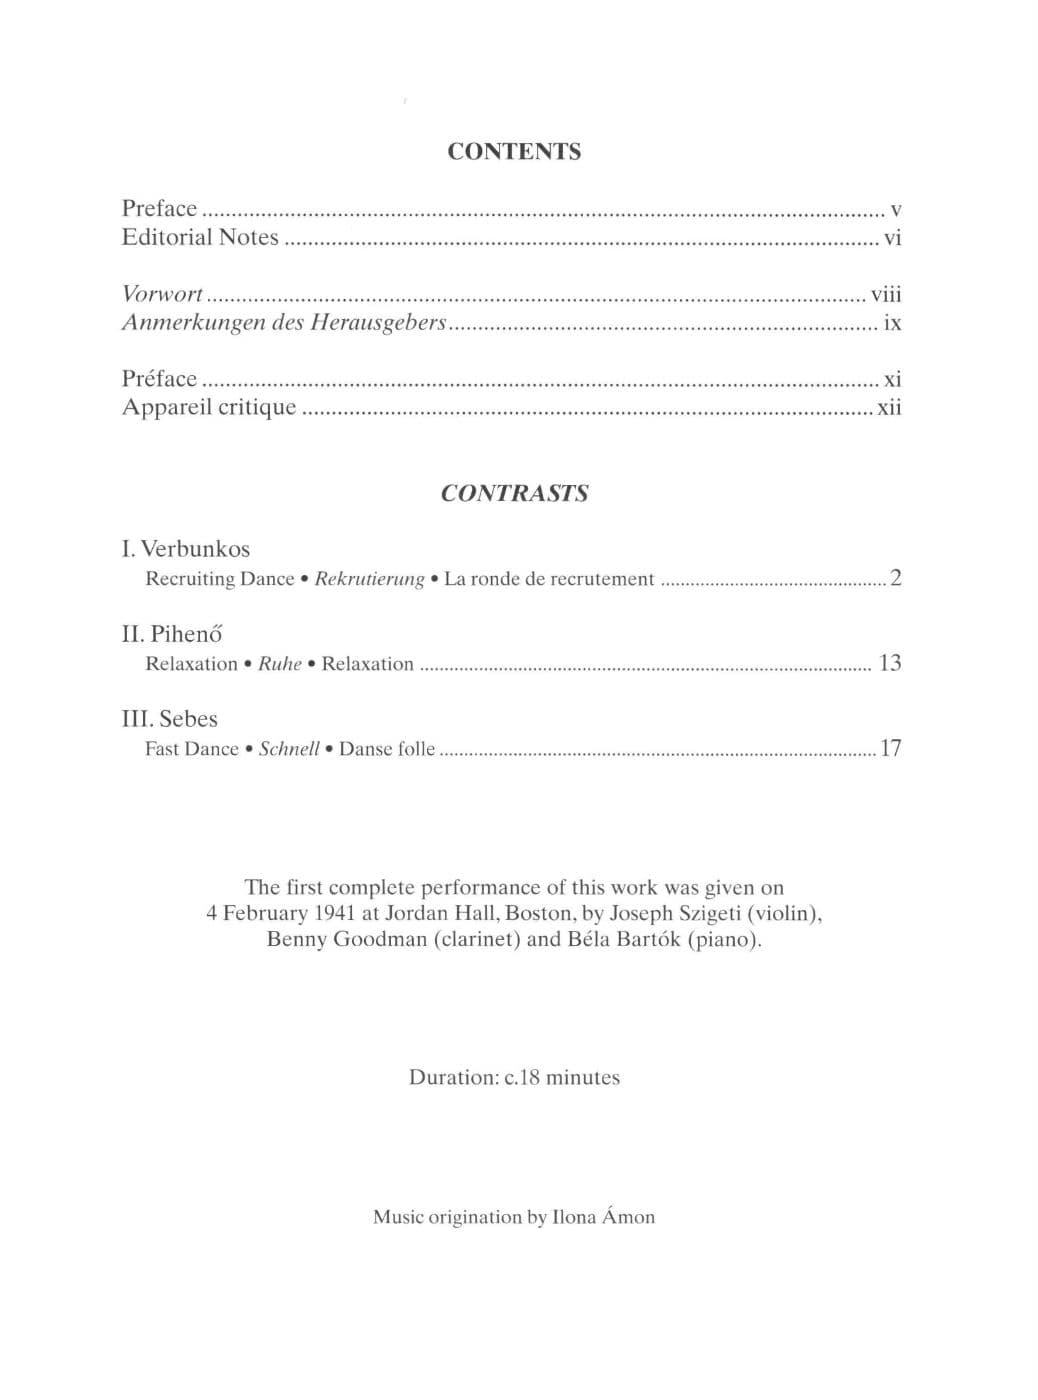 Bartok, Bela - Contrasts Sz 116 for Violin, Clarinet, and Piano (Corrected Edition 2002) - Edited by Dellamaggiore and Bartok - Boosey & Hawkes Edition